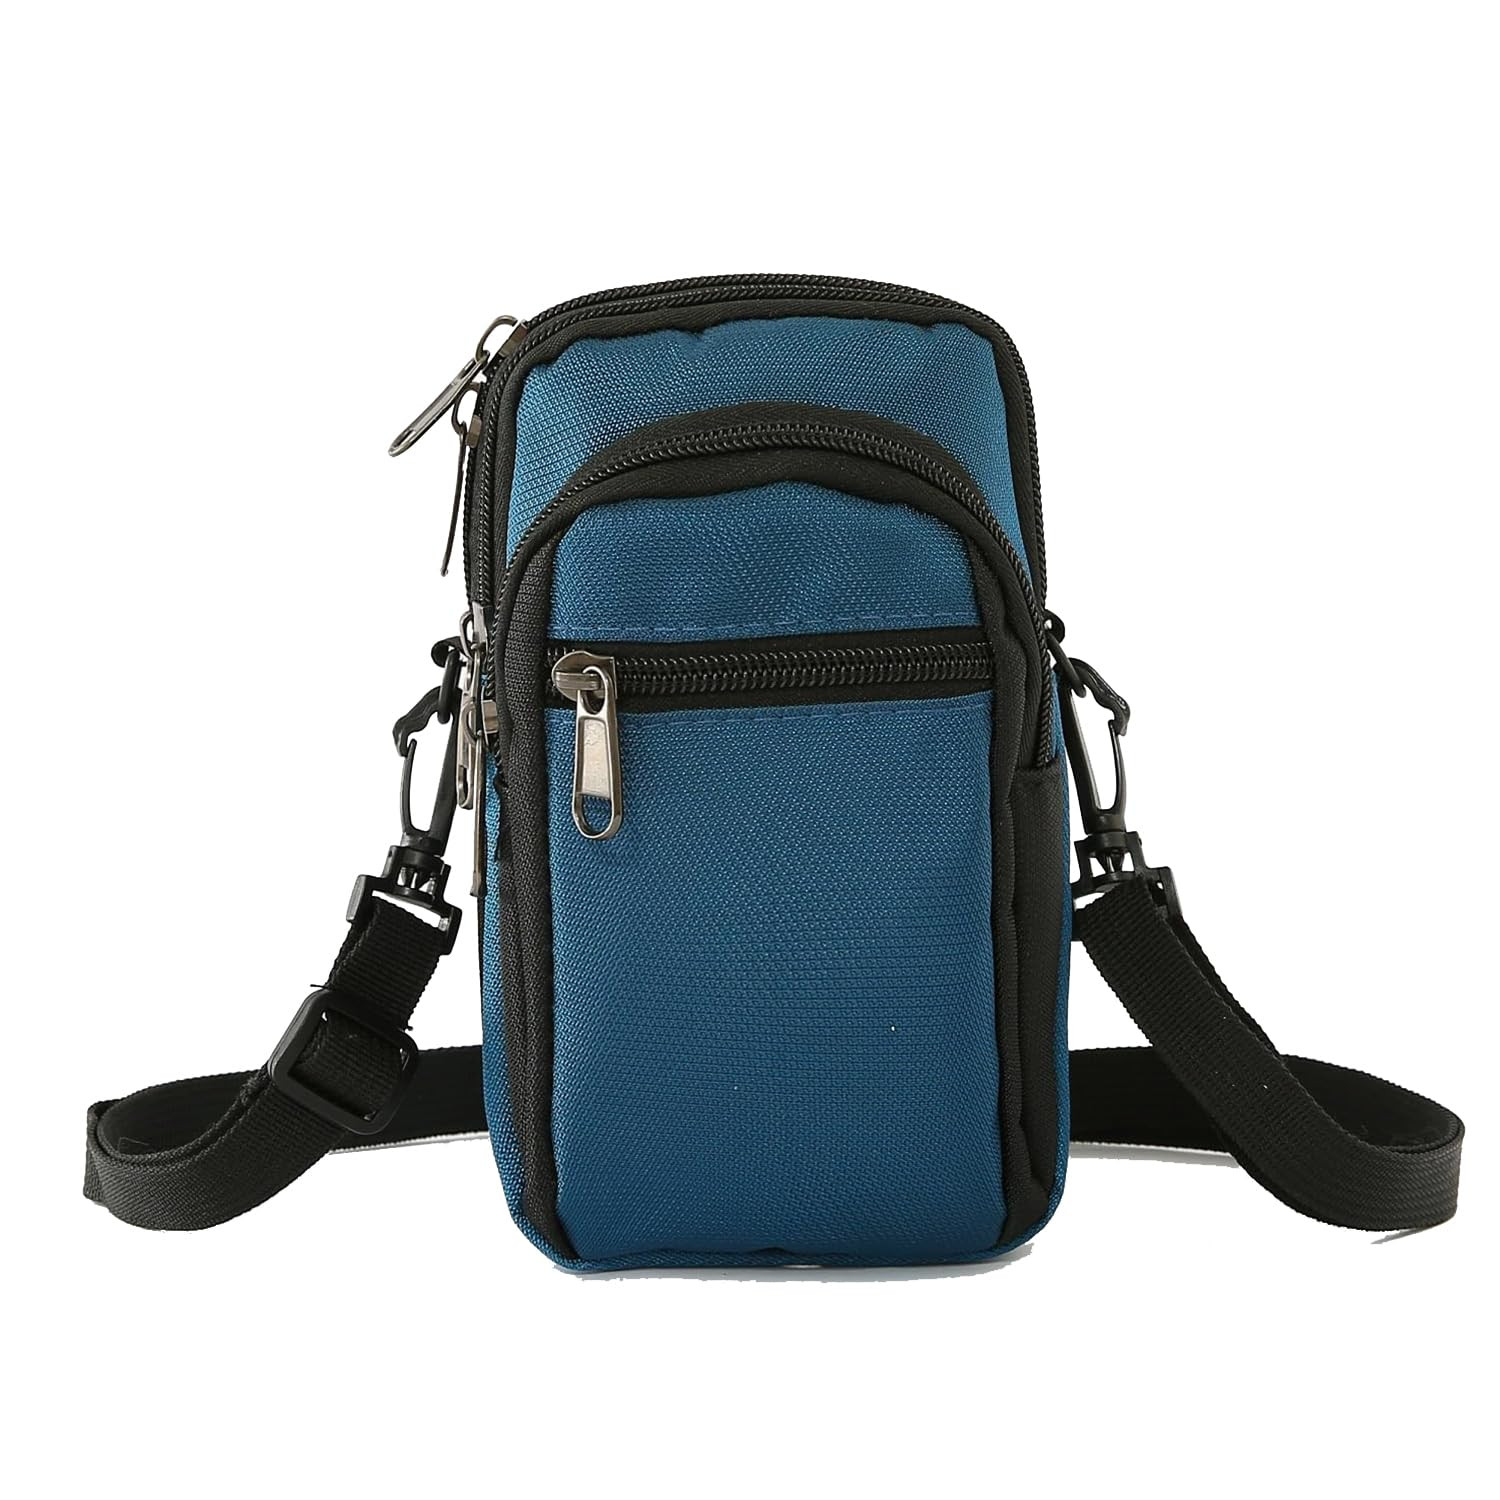 Kuber Industries Paspport Holder for Men & Women|Multifunction Passport Cover Bag|Nylon Passport Pouch for Luggage (Blue)